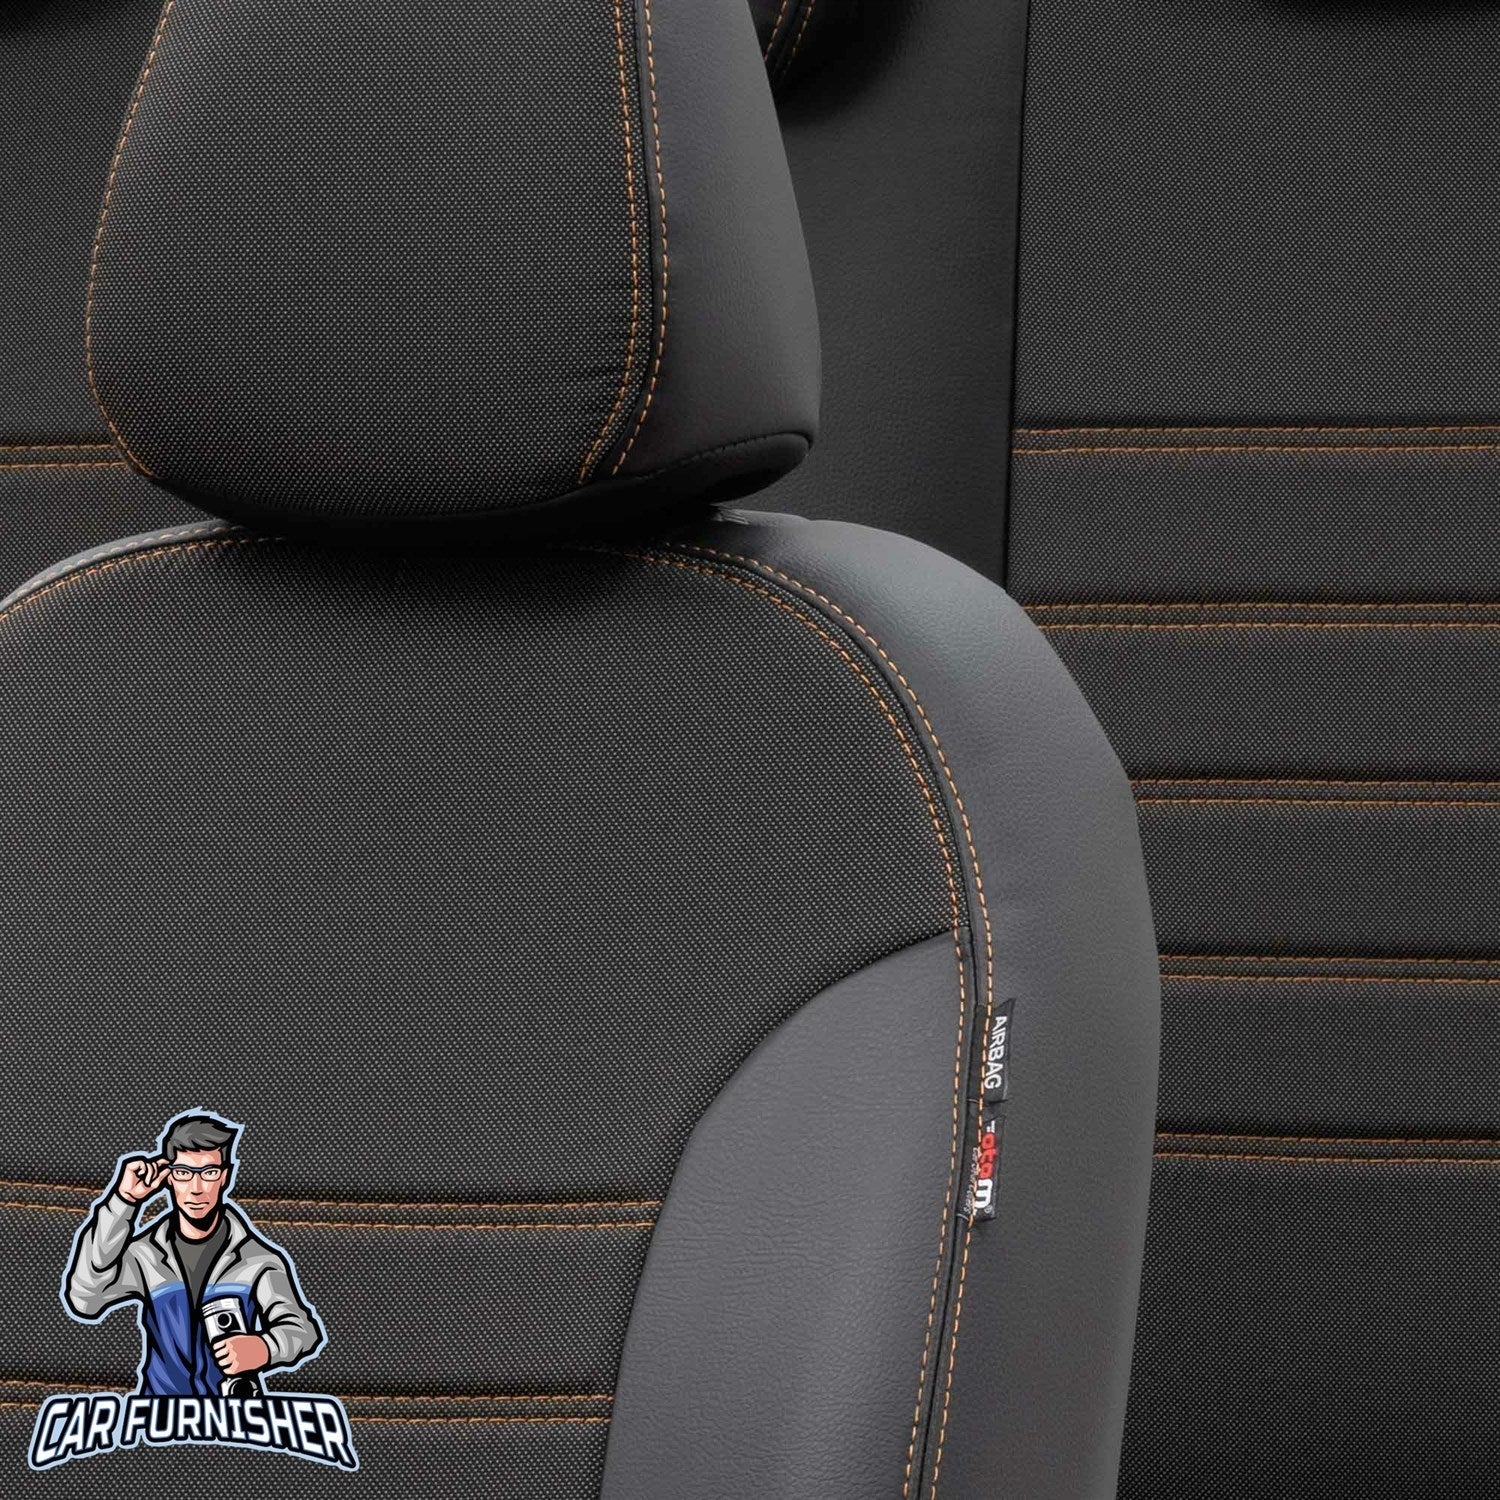 Citroen Jumper Seat Covers Paris Leather & Jacquard Design Dark Beige Leather & Jacquard Fabric